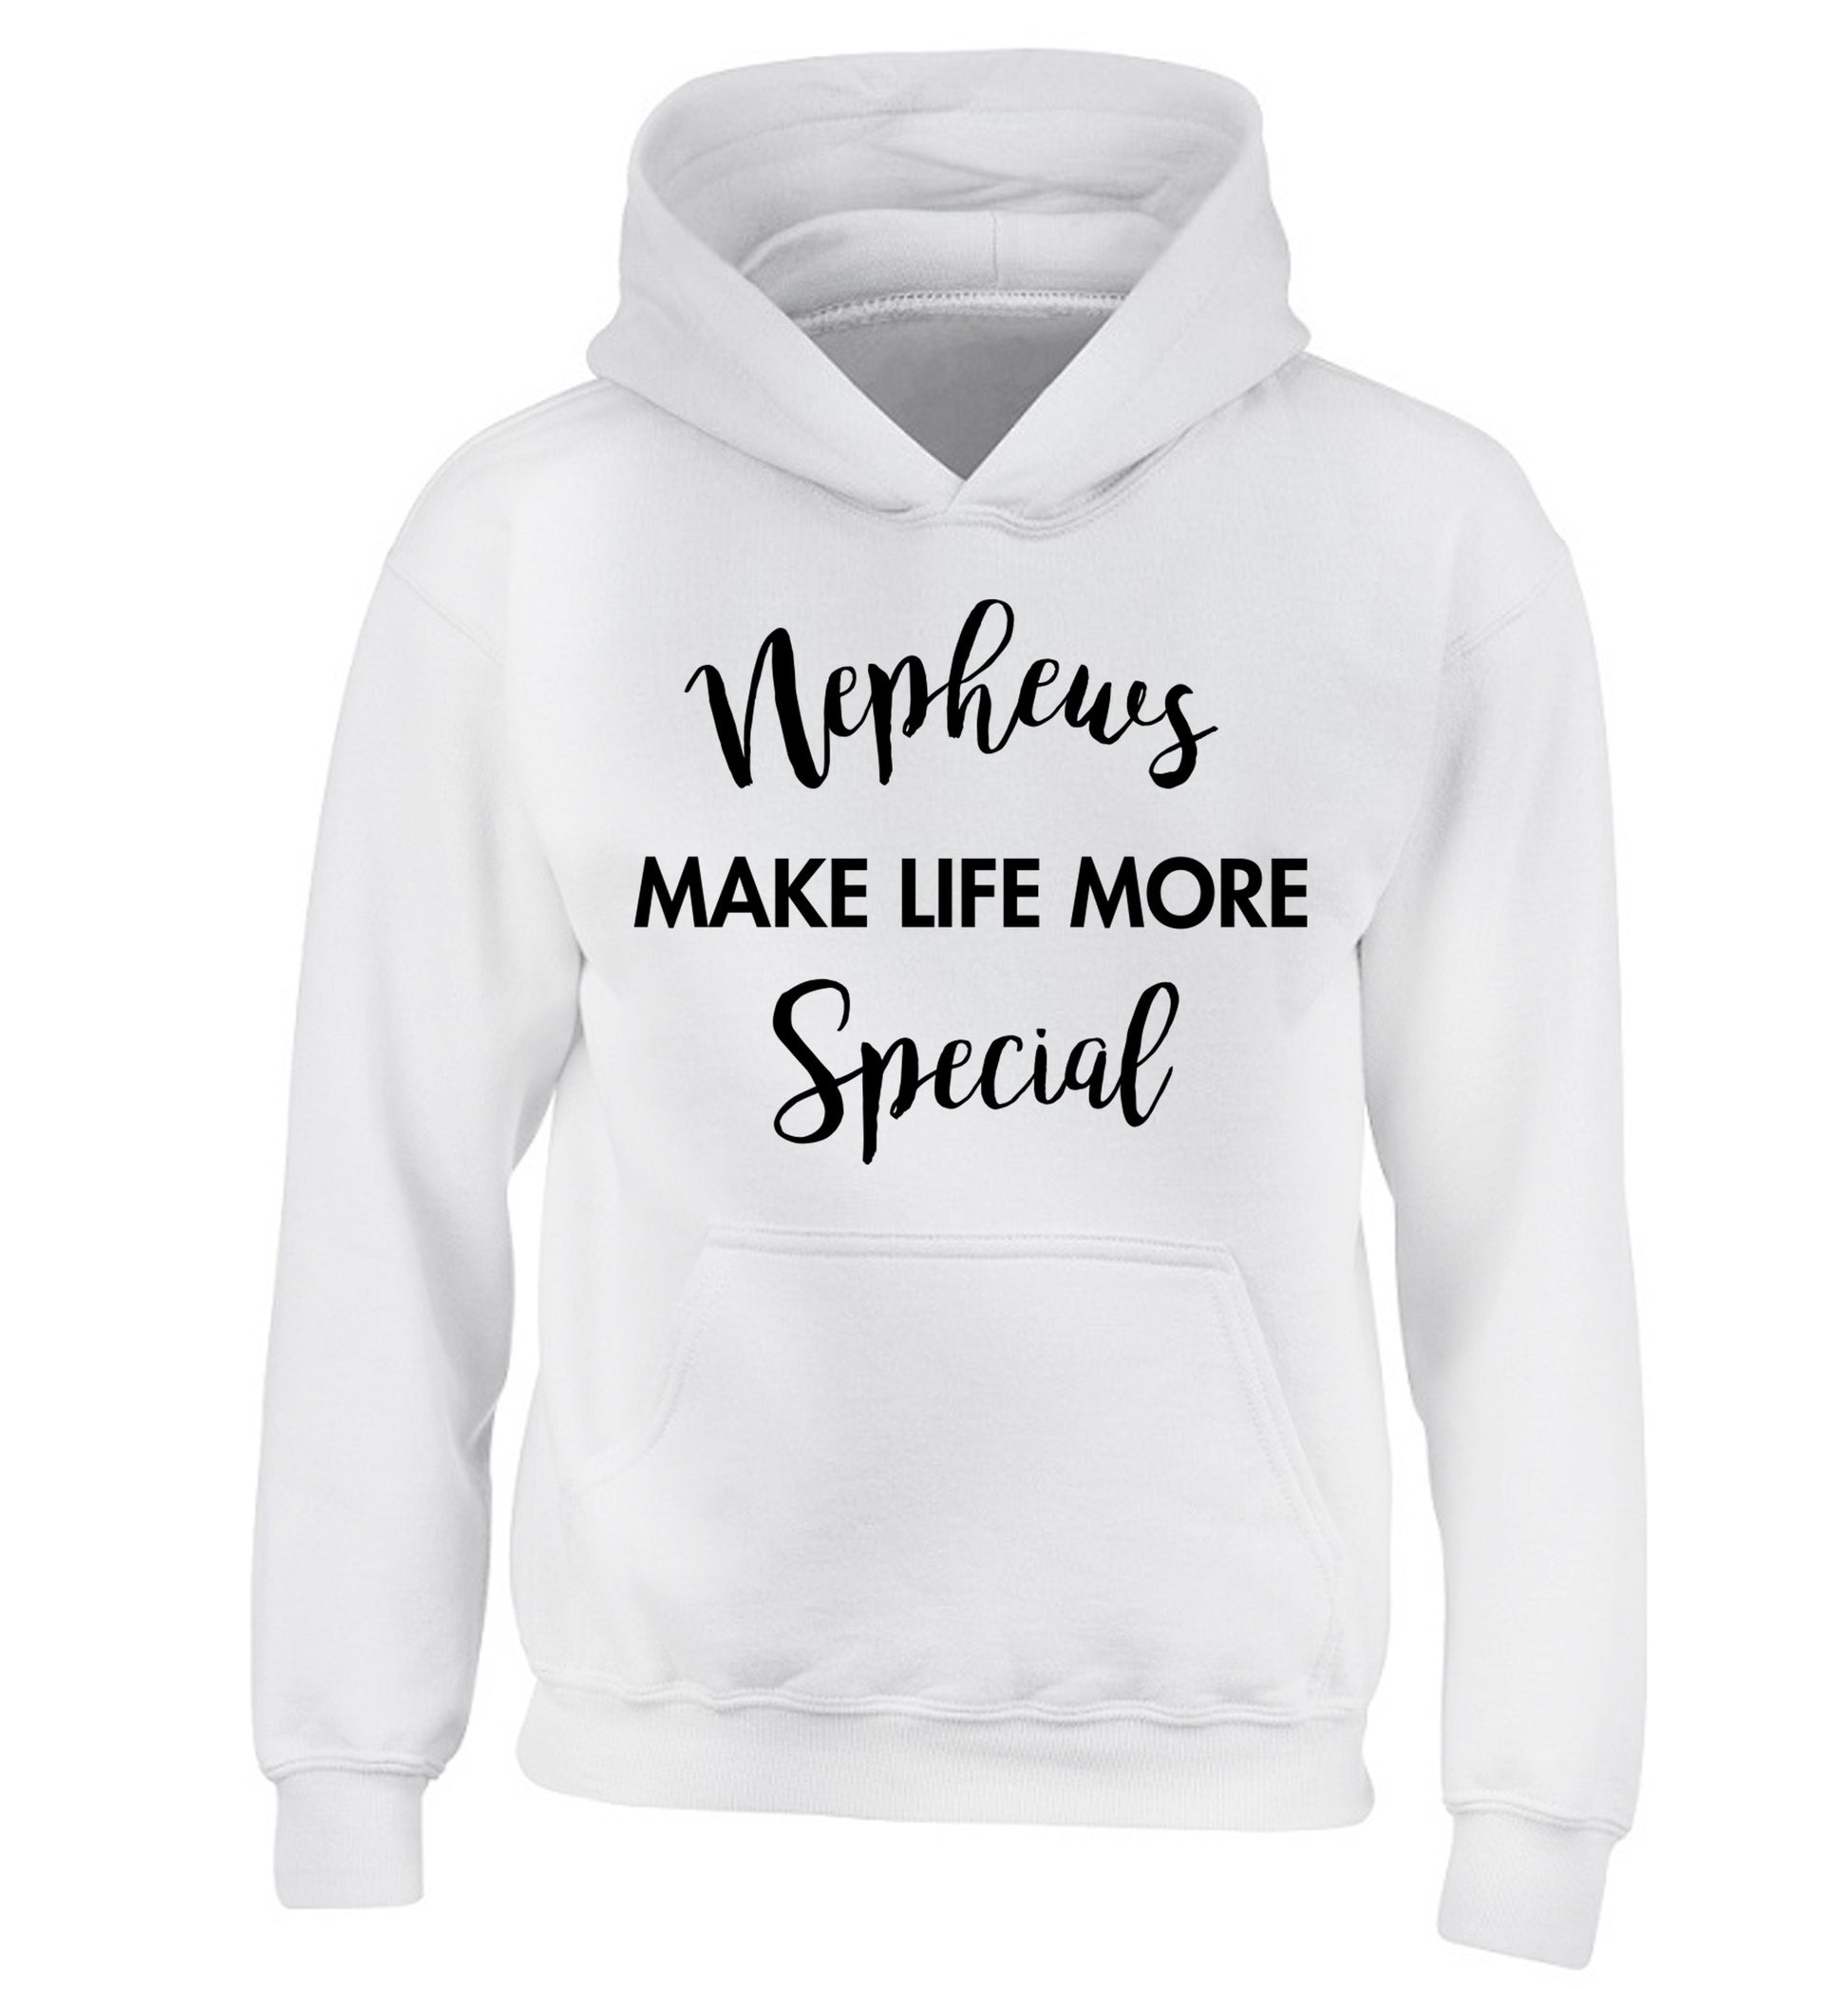 Nephews make life more special children's white hoodie 12-14 Years